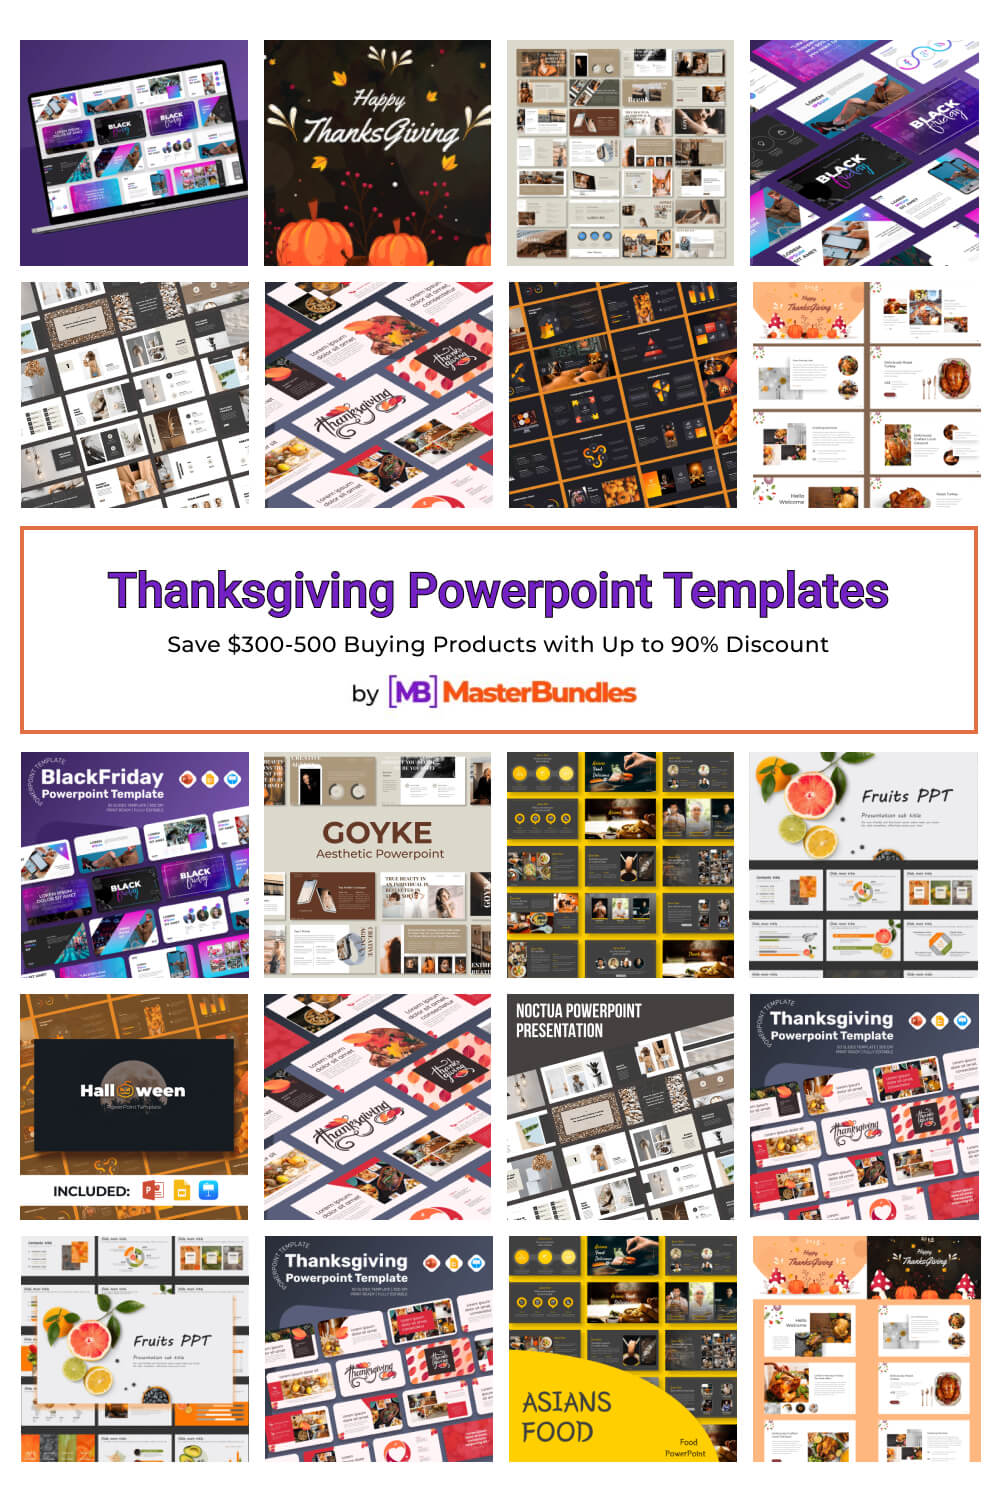 thanksgiving powerpoint templates pinterest image.